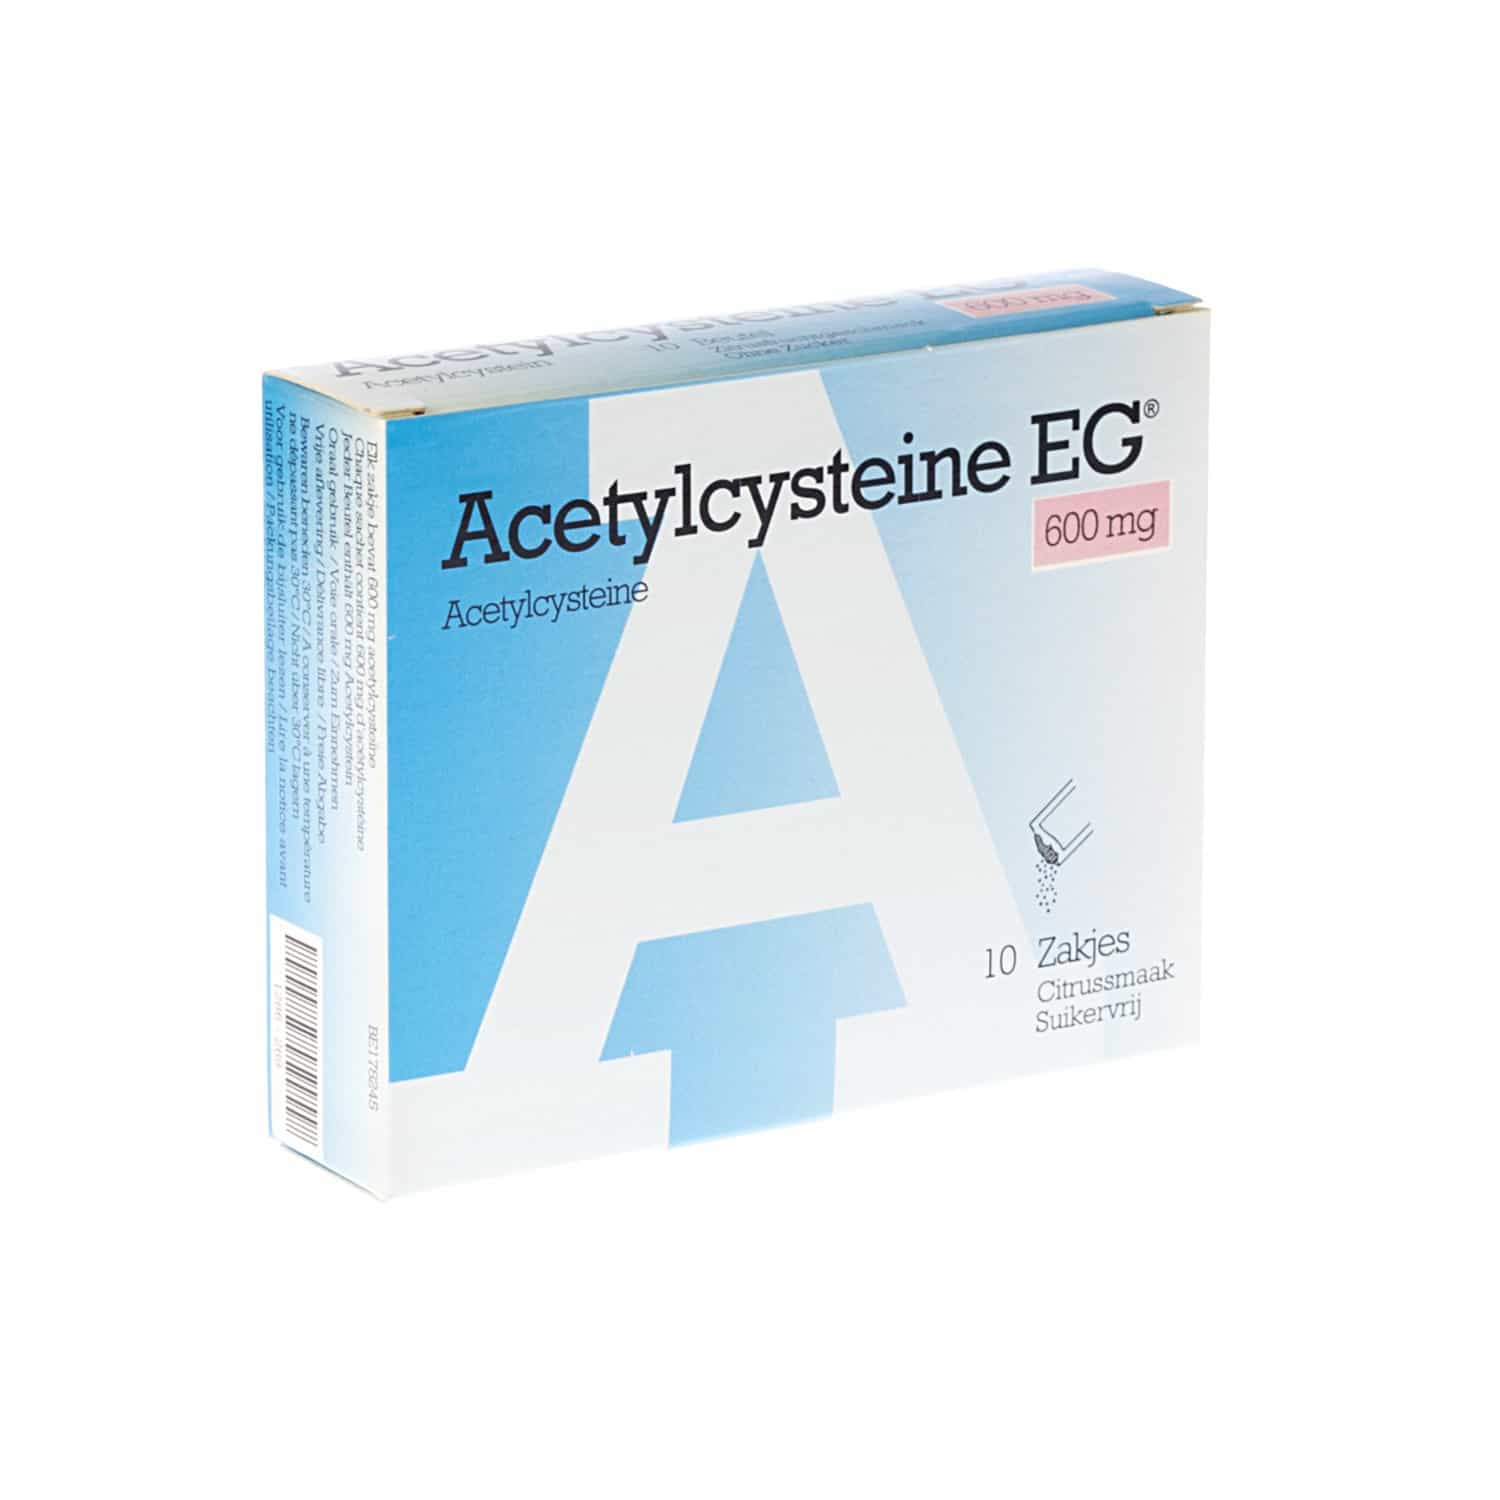 Acetylcysteine EG 600 mg